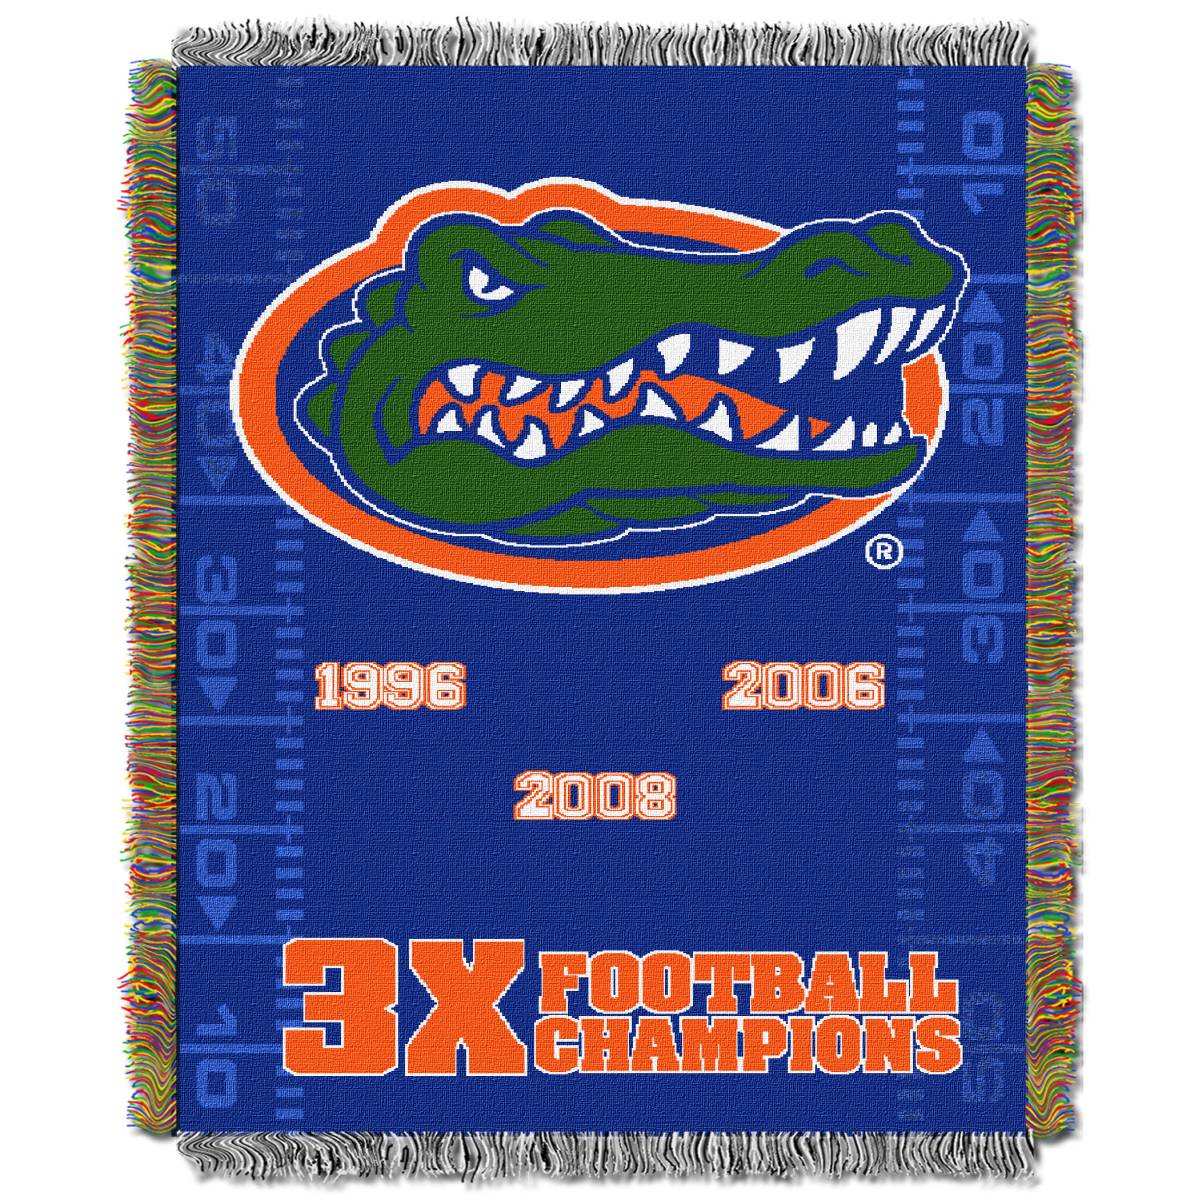 Florida Gators Commemorative Woven Tapestry Throw Blanket